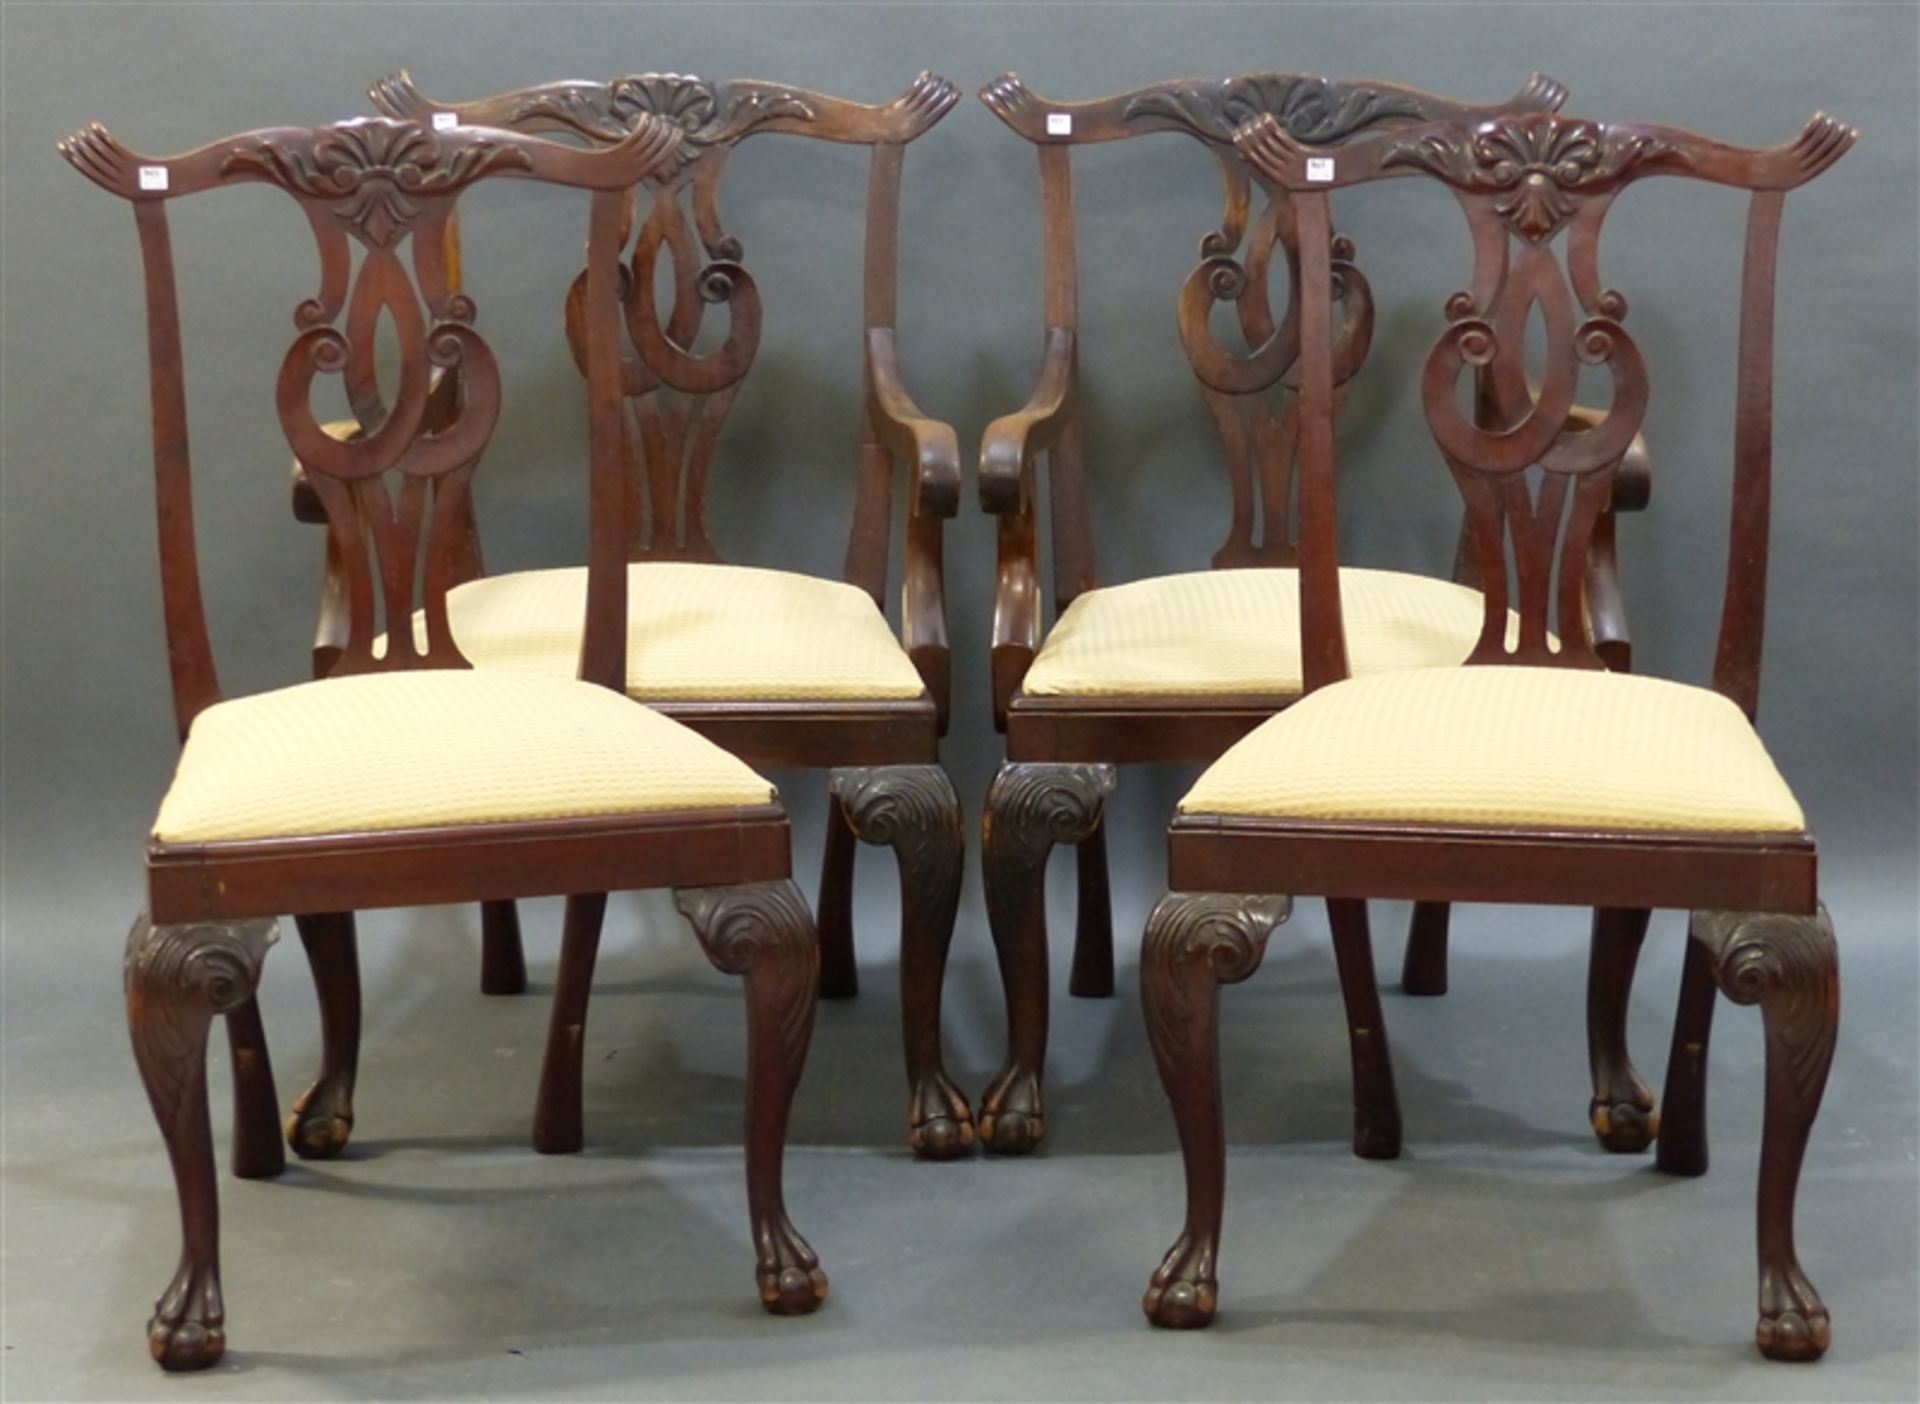 Sitzgarnitur 4-tlg., Mahagoni, zwei Stühle, zwei Sessel, um 1920, beschnitzt, heller Stoffbezug,